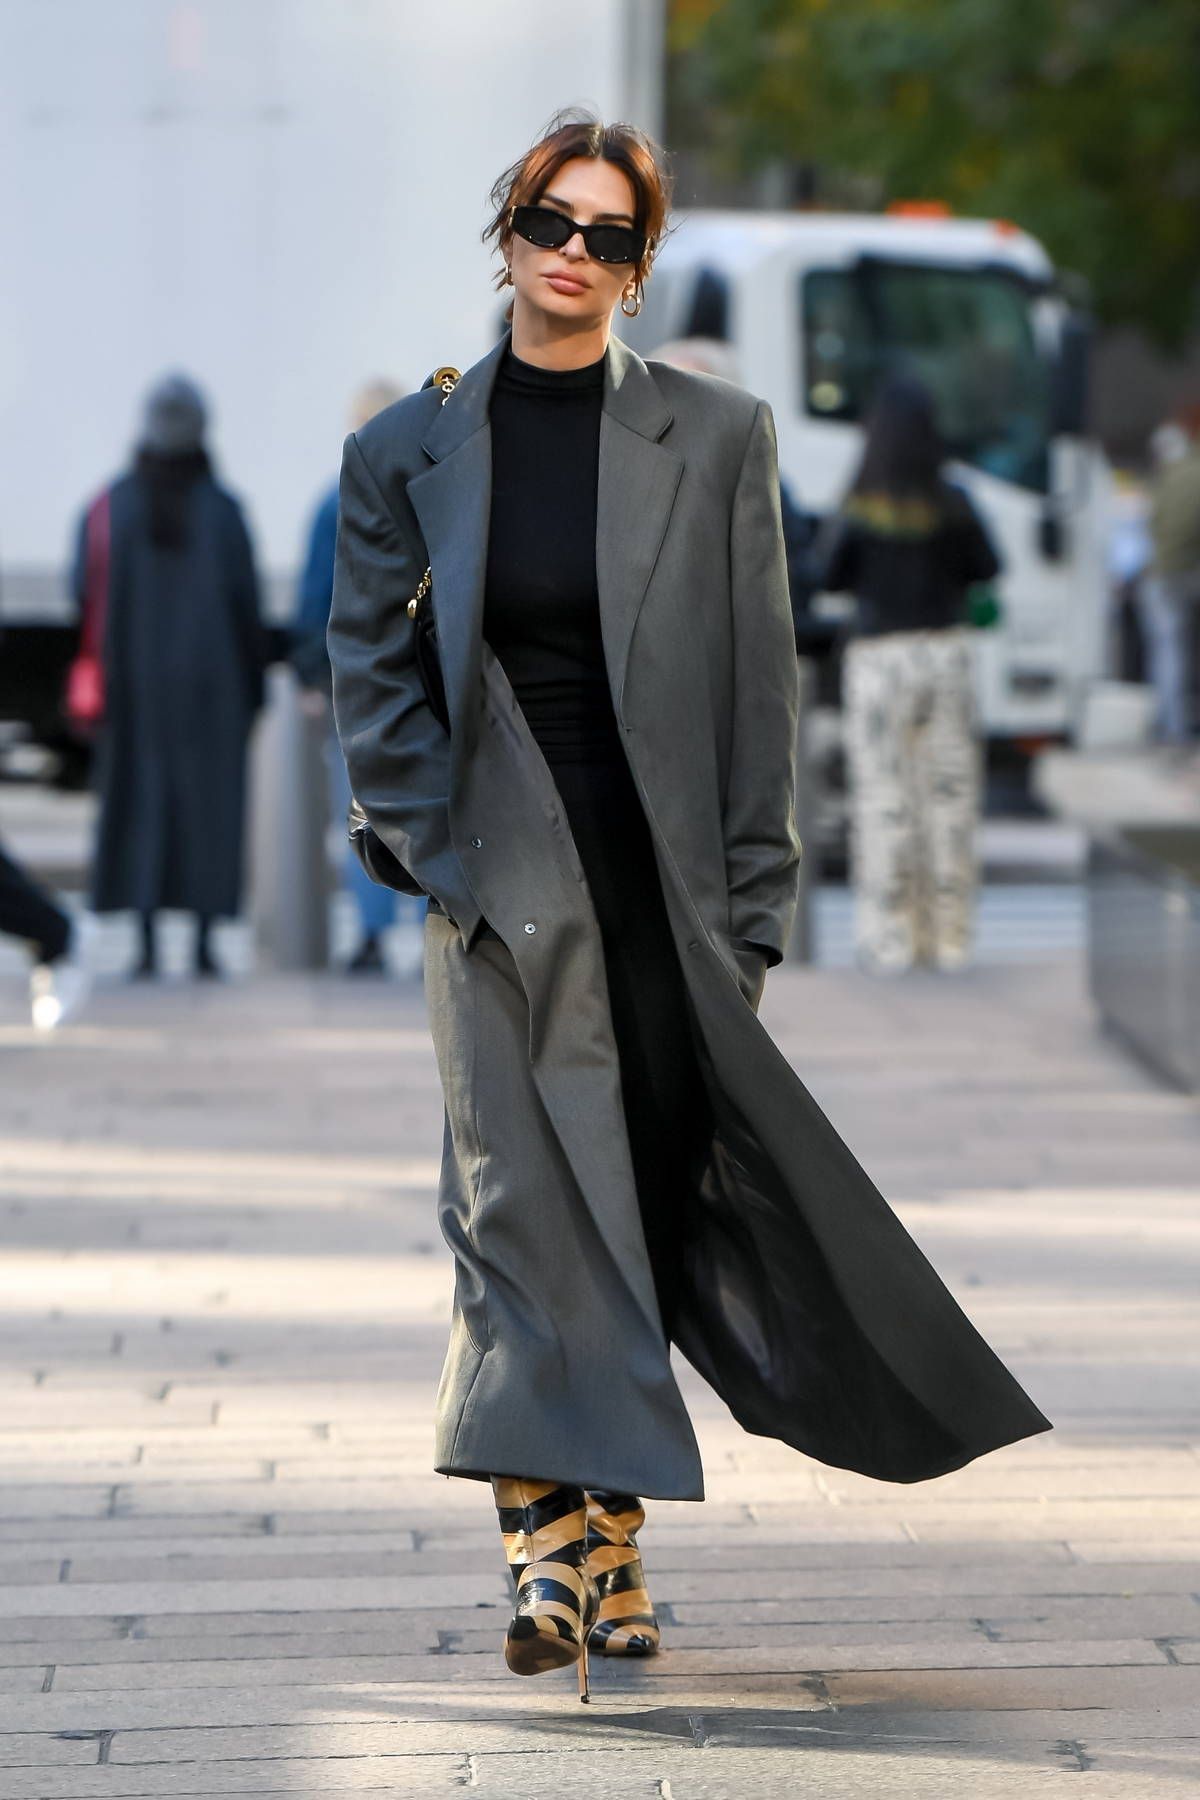 Emily Ratajkowski in New York City wearing Mimchik Grey Coat, Loewe Black Squeeze Bag, Miu Miu Miu Glimpse Sunglasses, Jimmy Choo Beren Boots